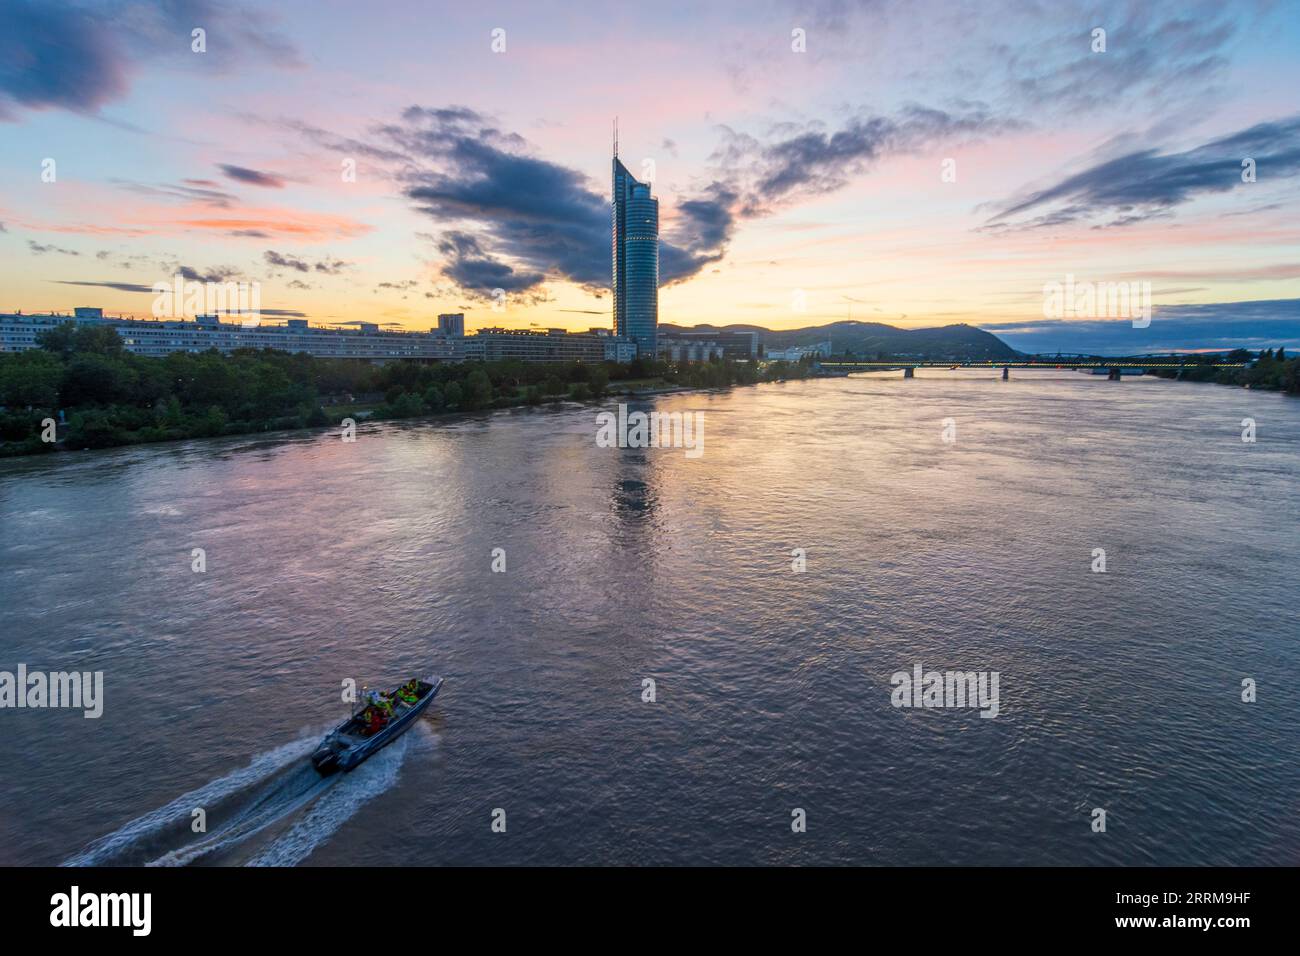 Vienna, fiume Donau (Danubio), Millennium Tower, ponte Nordbahnbrücke, nave di soccorso, tramonto tra 20. Distretto Brigittenau, Vienna, Austria Foto Stock